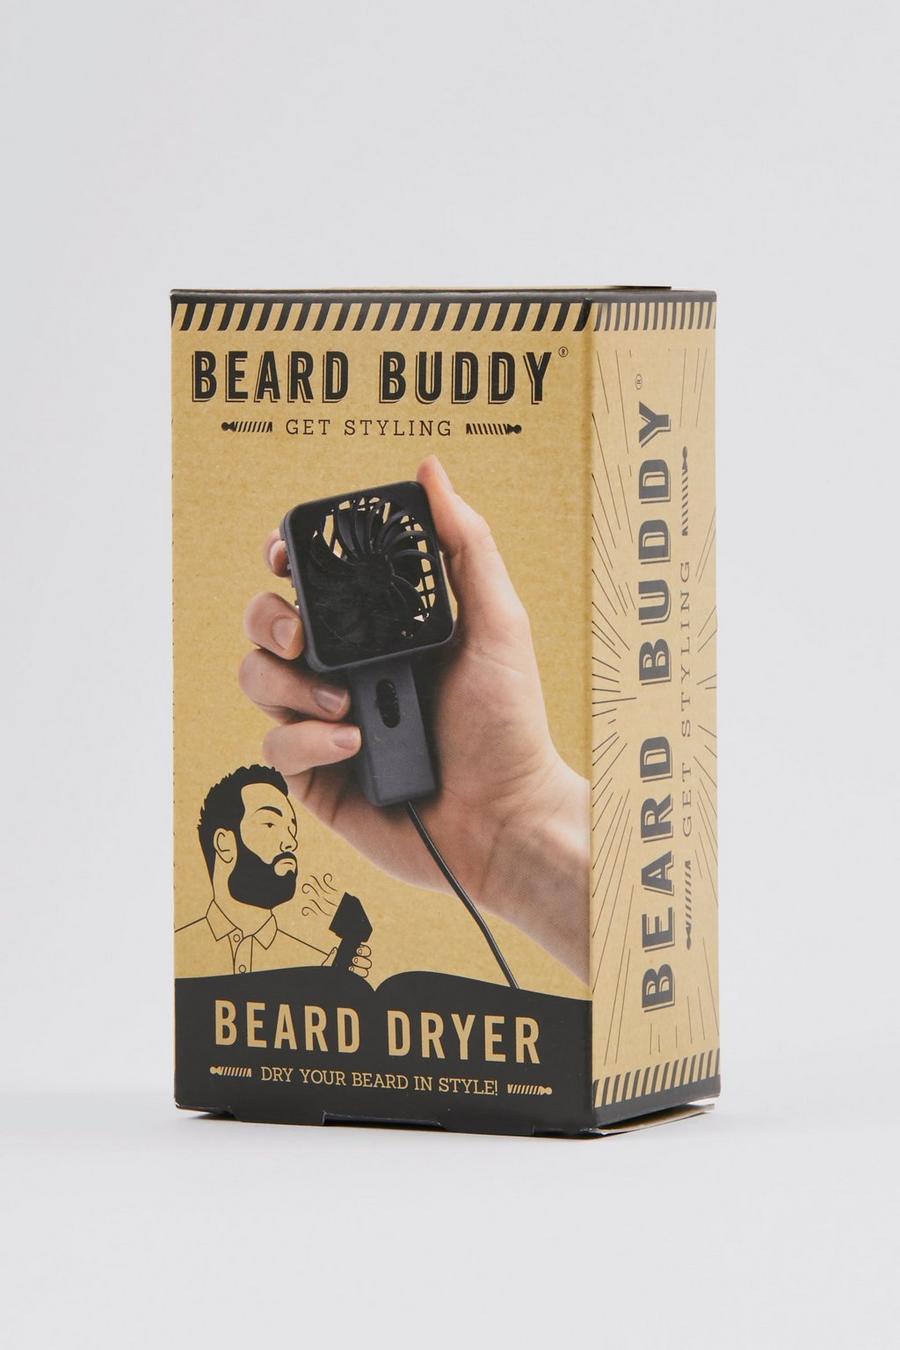 Multi Beard Buddy Beard Dyer 